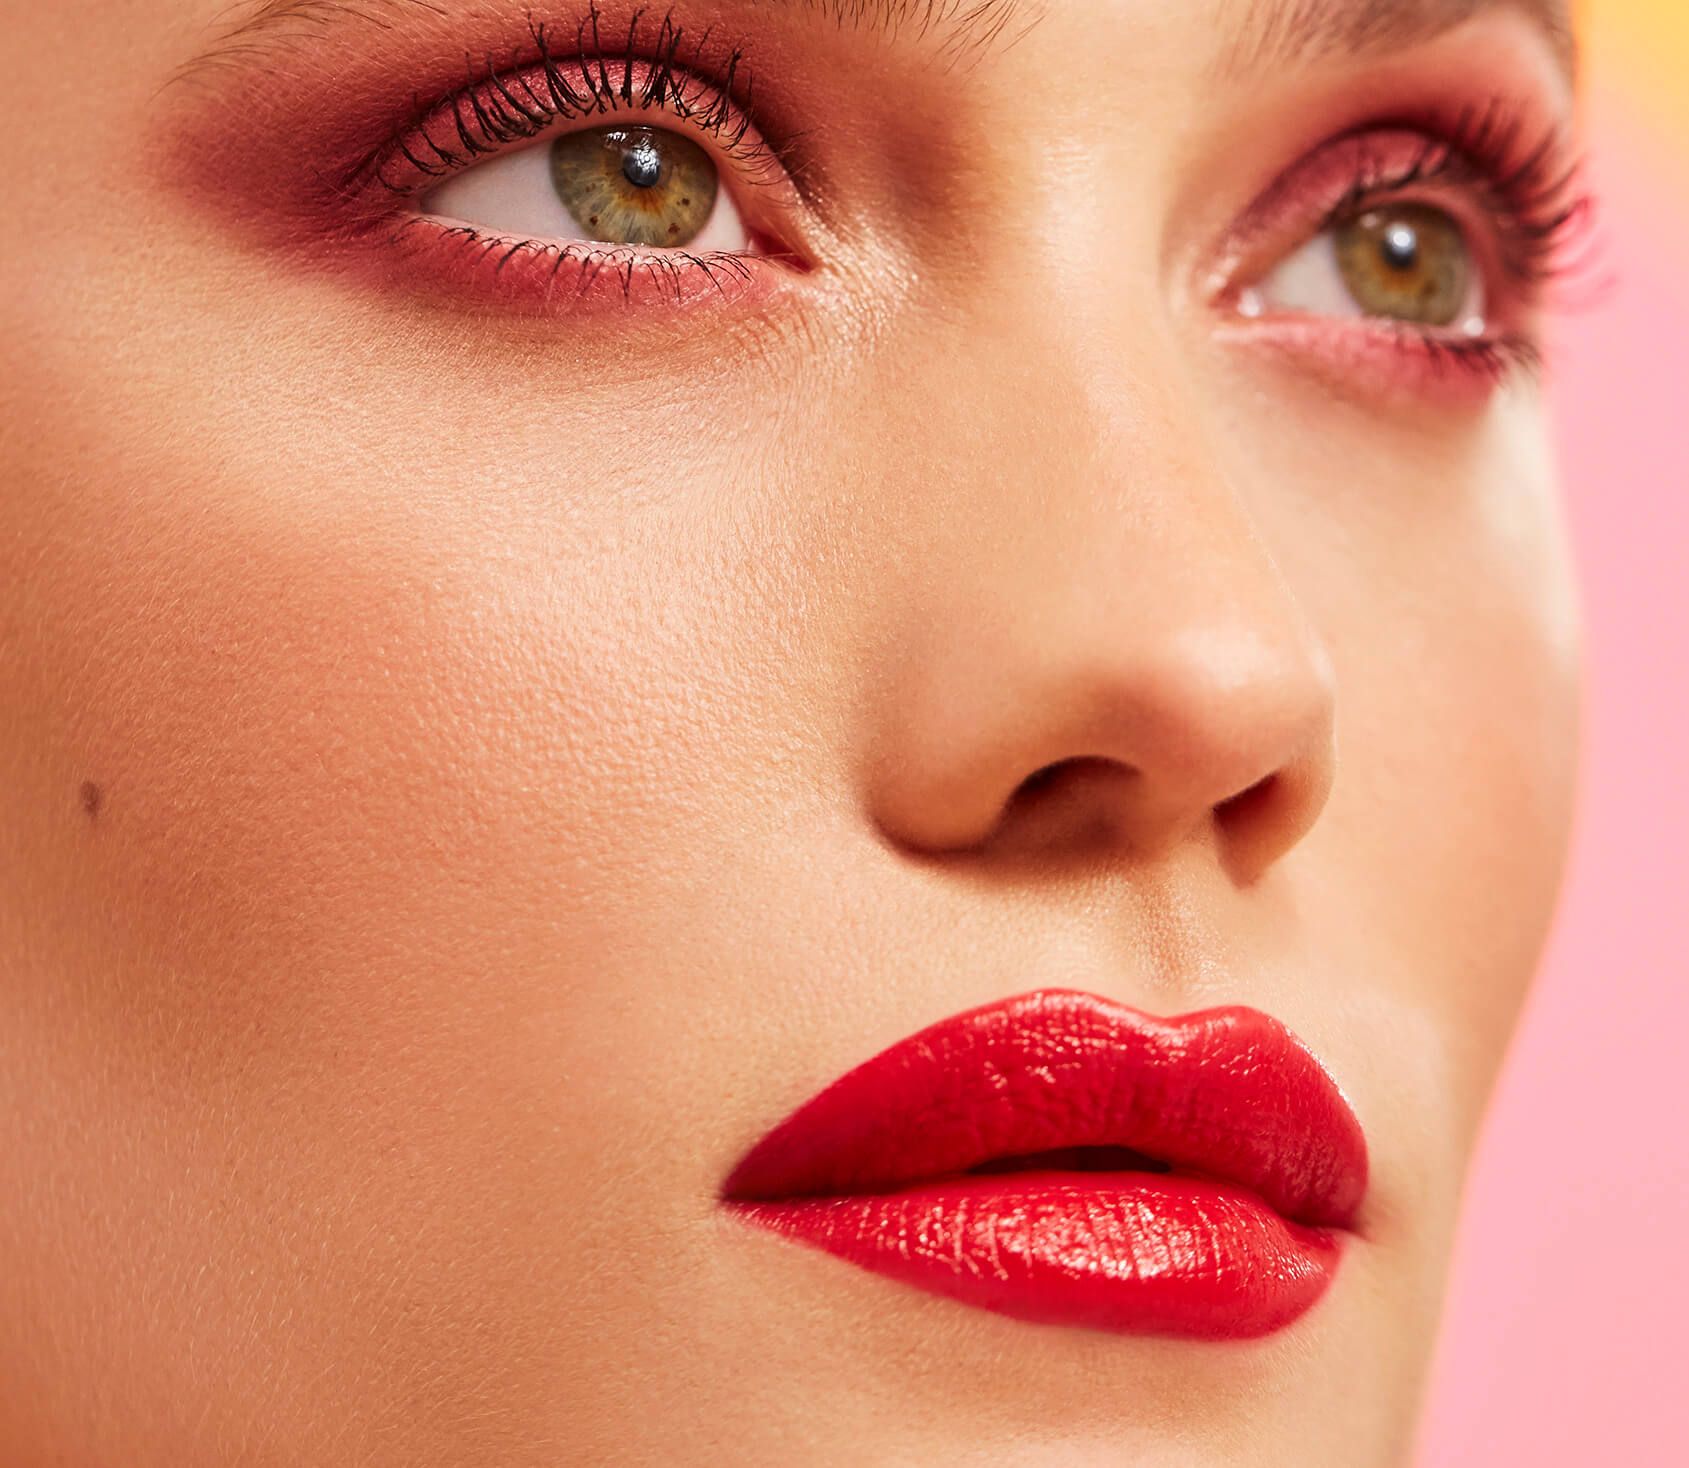 Proenza Schouler for Lancome lipstick